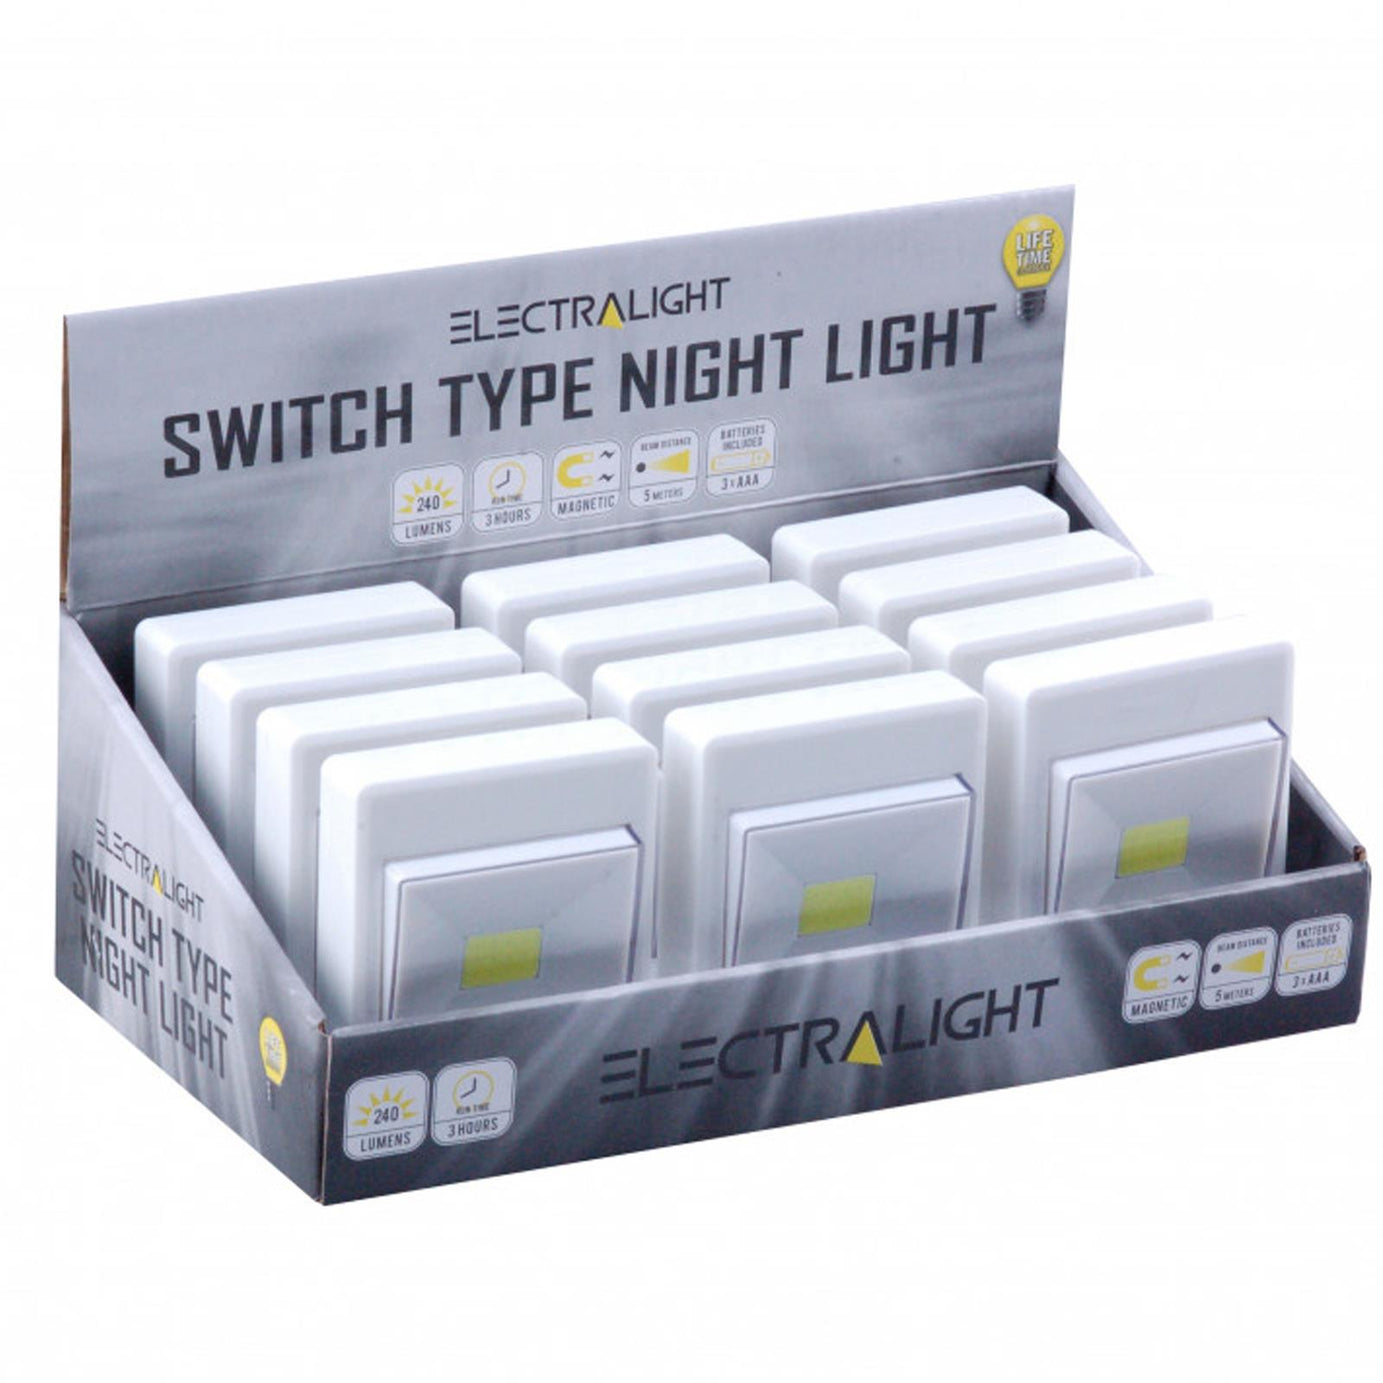 BlueSpot Electralight Switch Type Night Light (240 Lumens) Magnetic Back For Basements Hallways